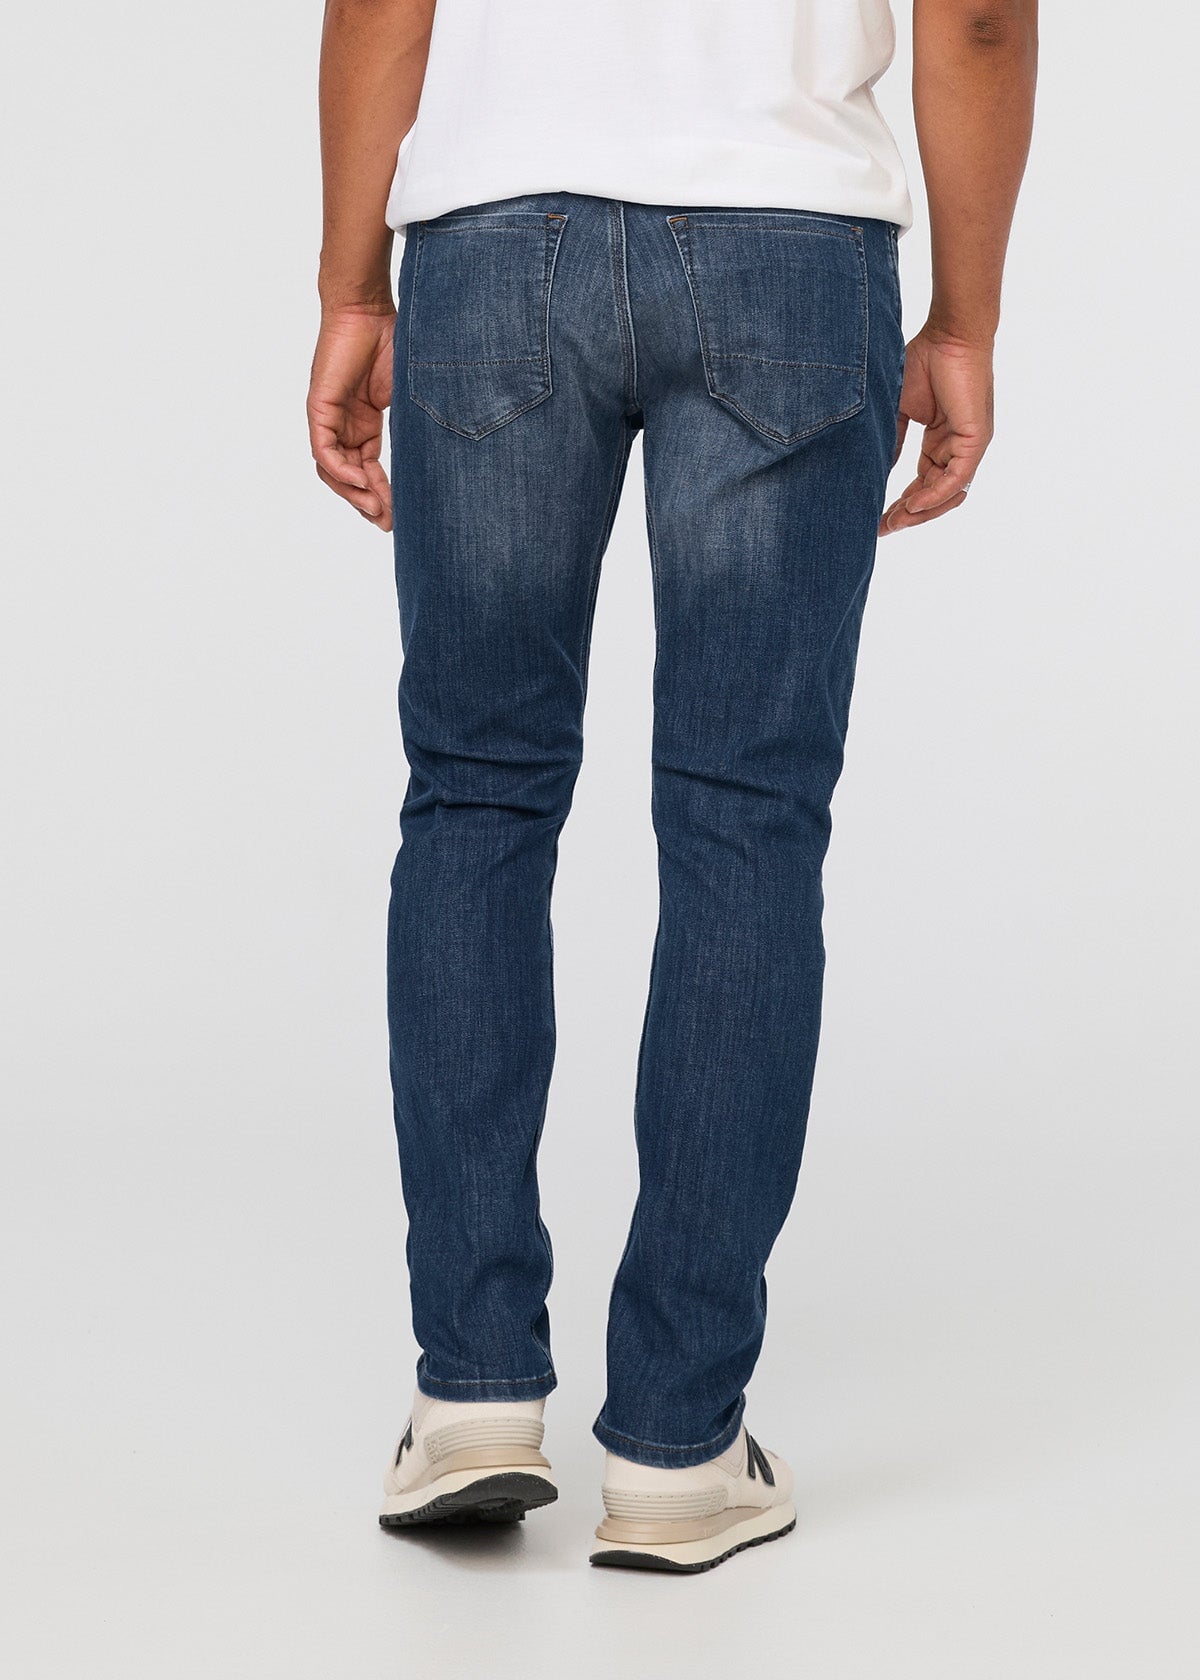 Performance Denim Relaxed Taper - Galactic  Mens stretch jeans, Versatile  denim, Roomy pants